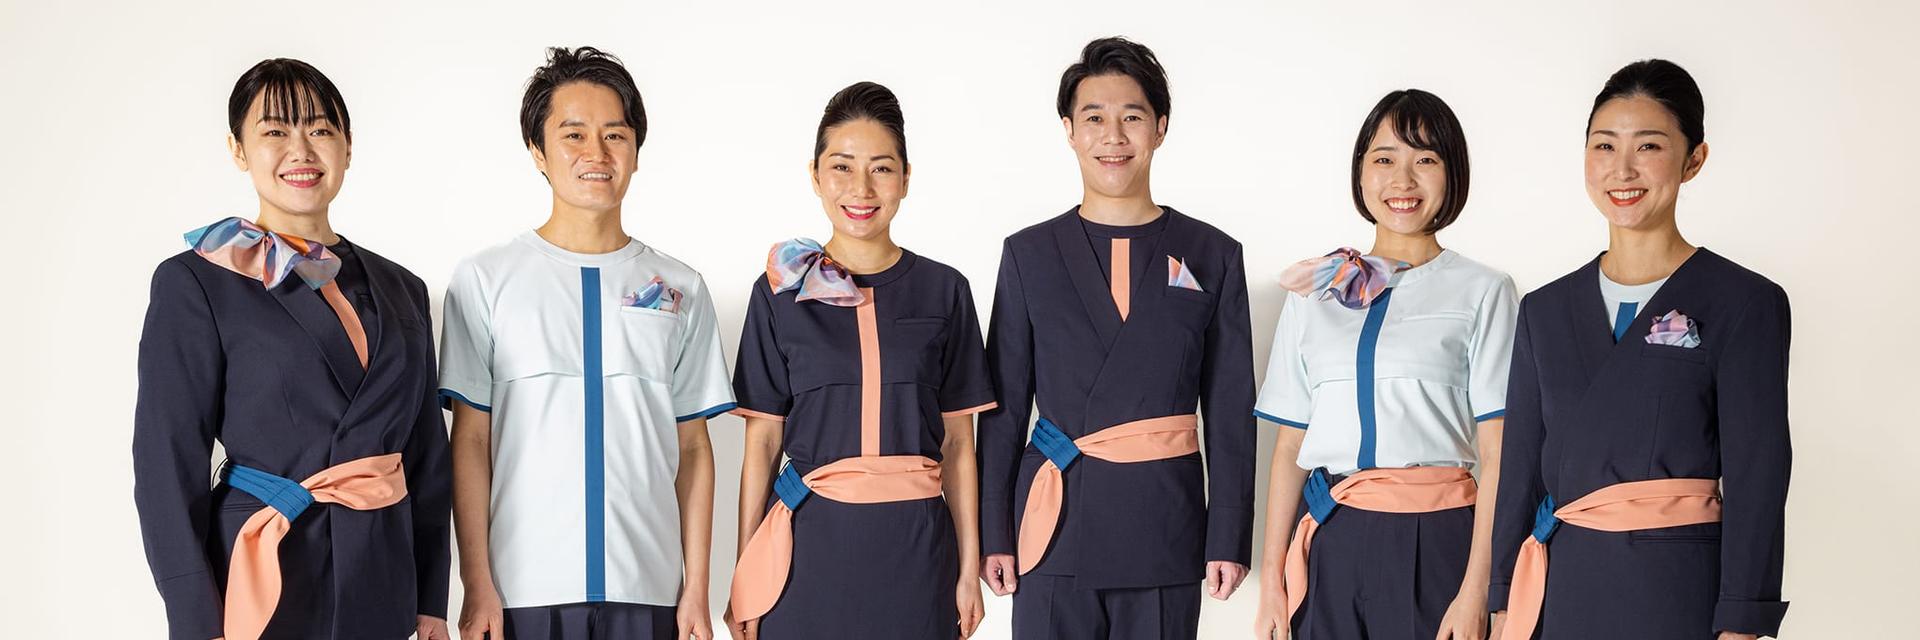 AirJapan의 새로운 유니폼을 입은 객실 승무원 6명의 단체 사진